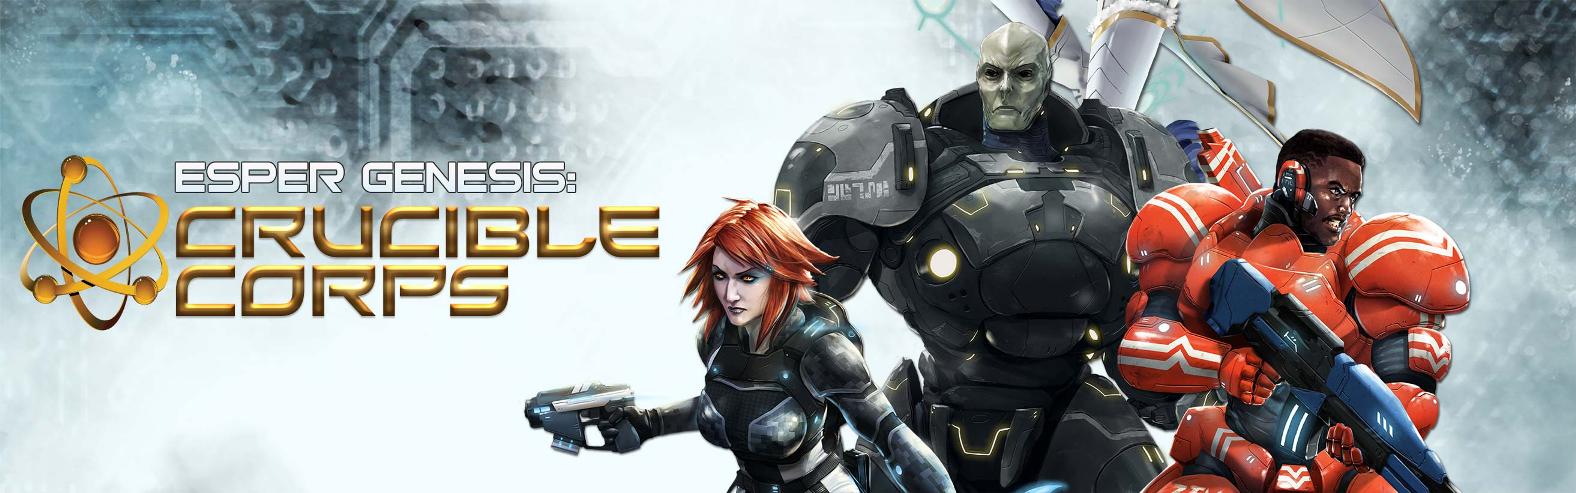 Crucible Corps RPG web banner